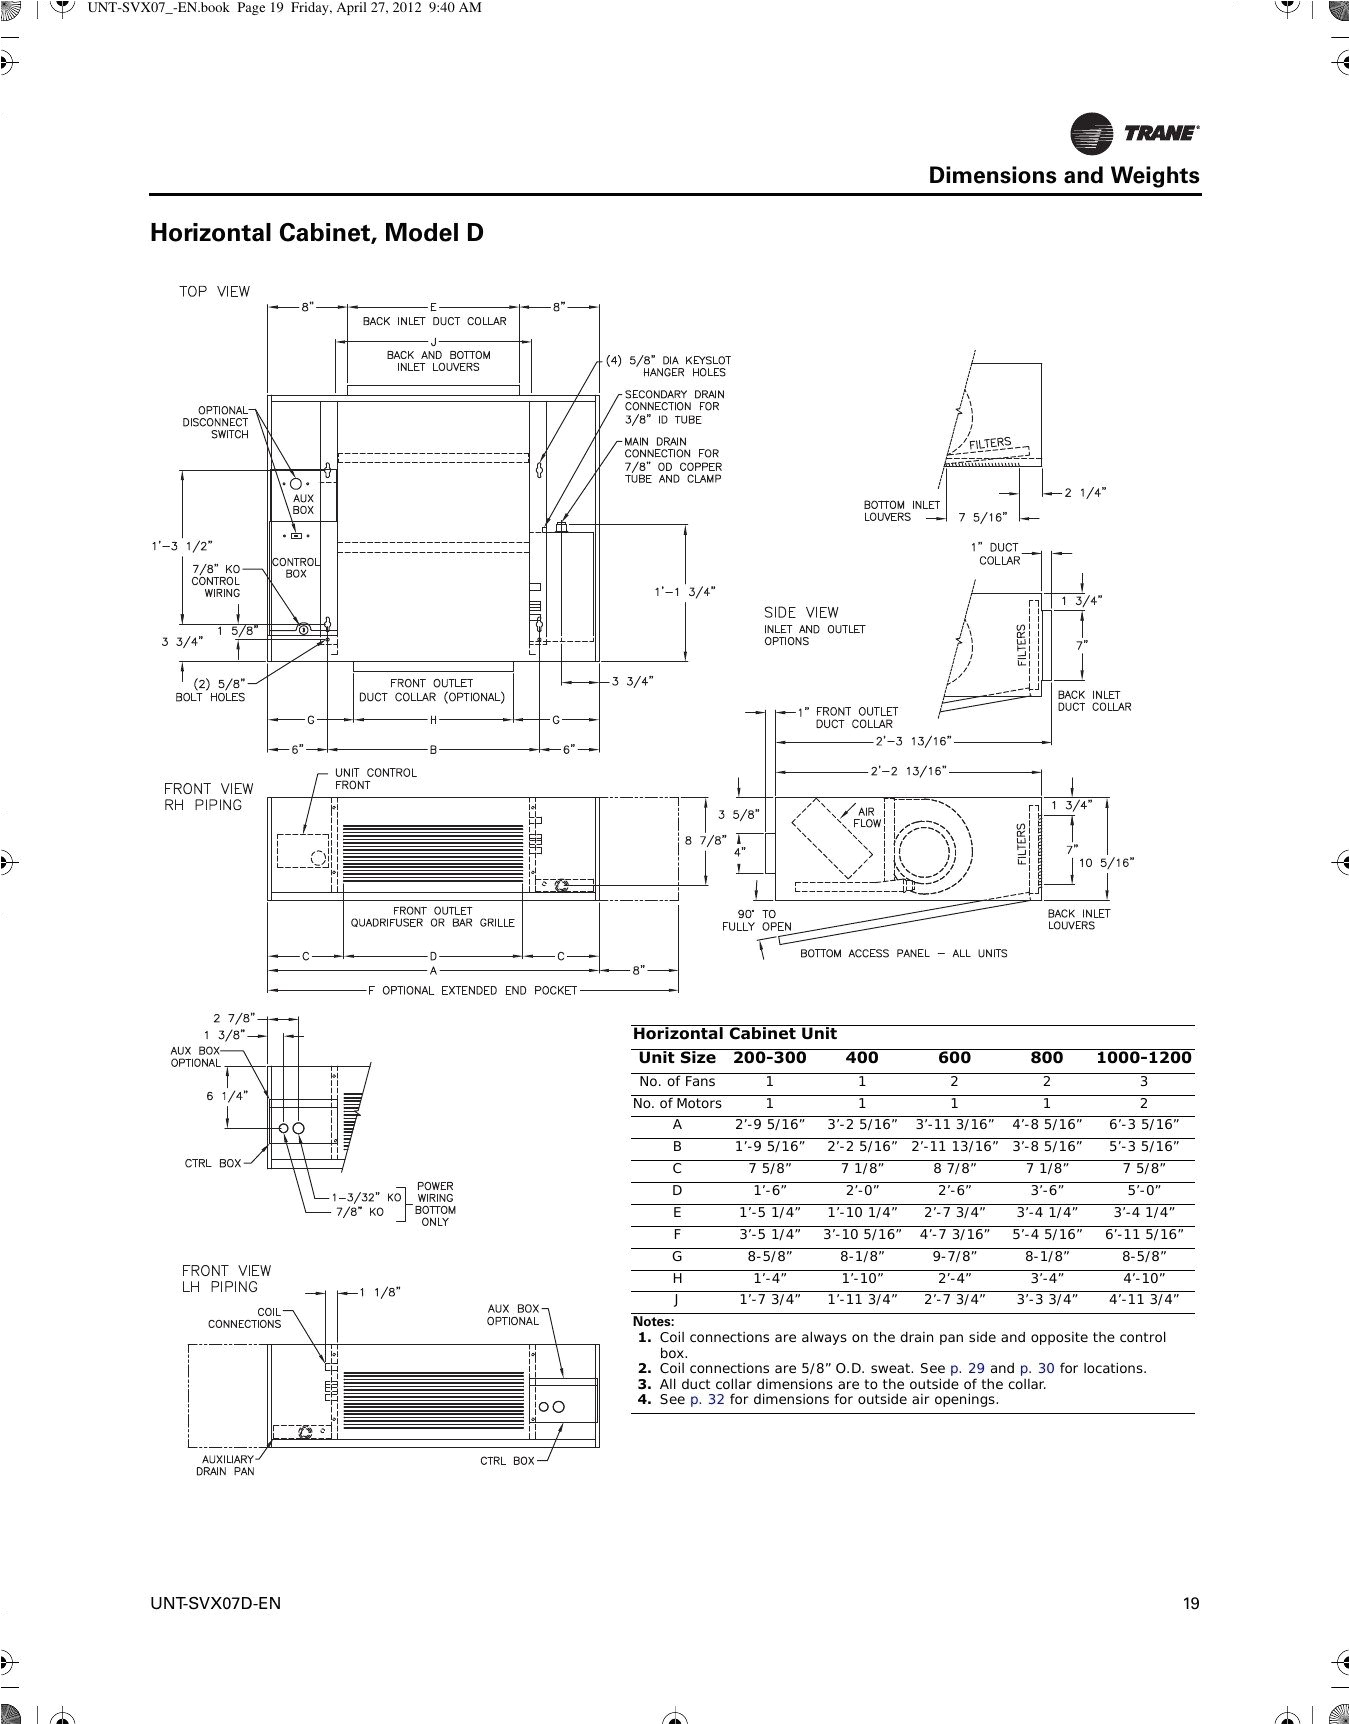 trane wiring diagram heat pump